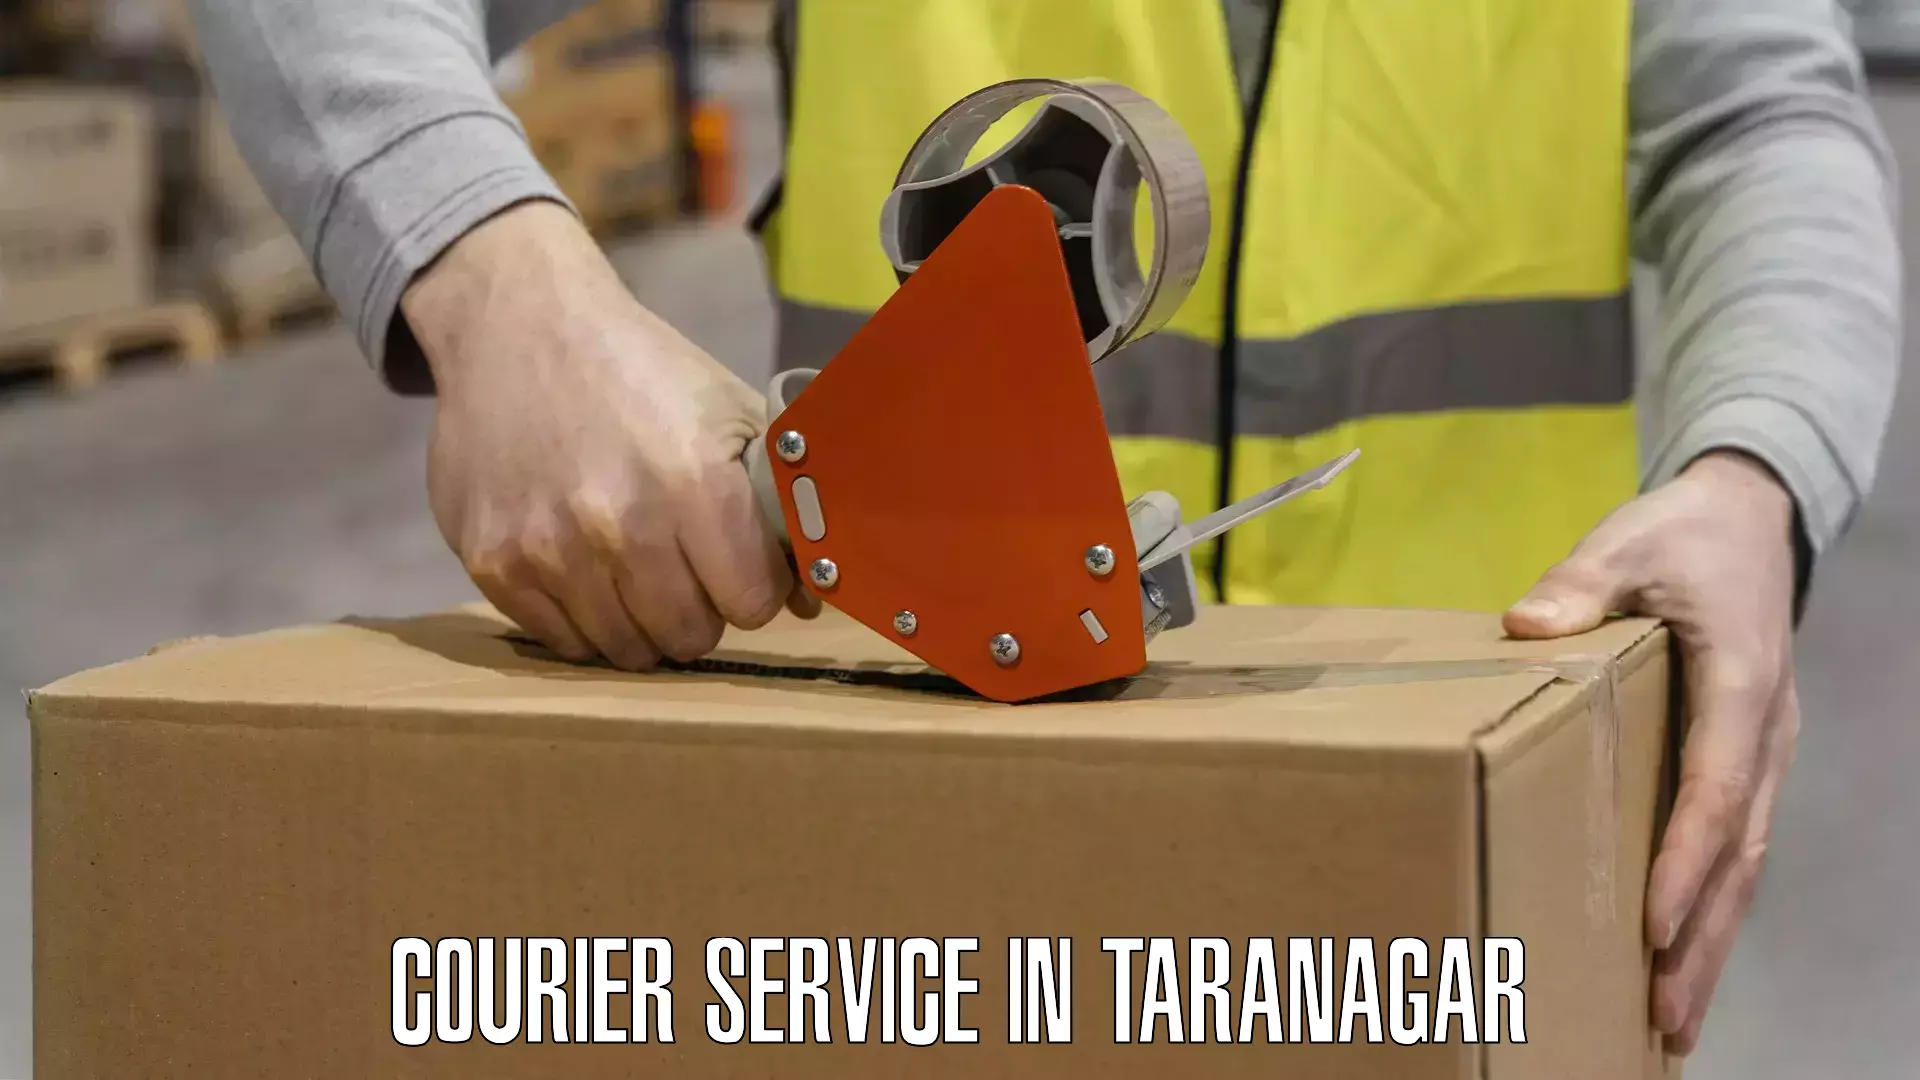 Versatile courier options in Taranagar